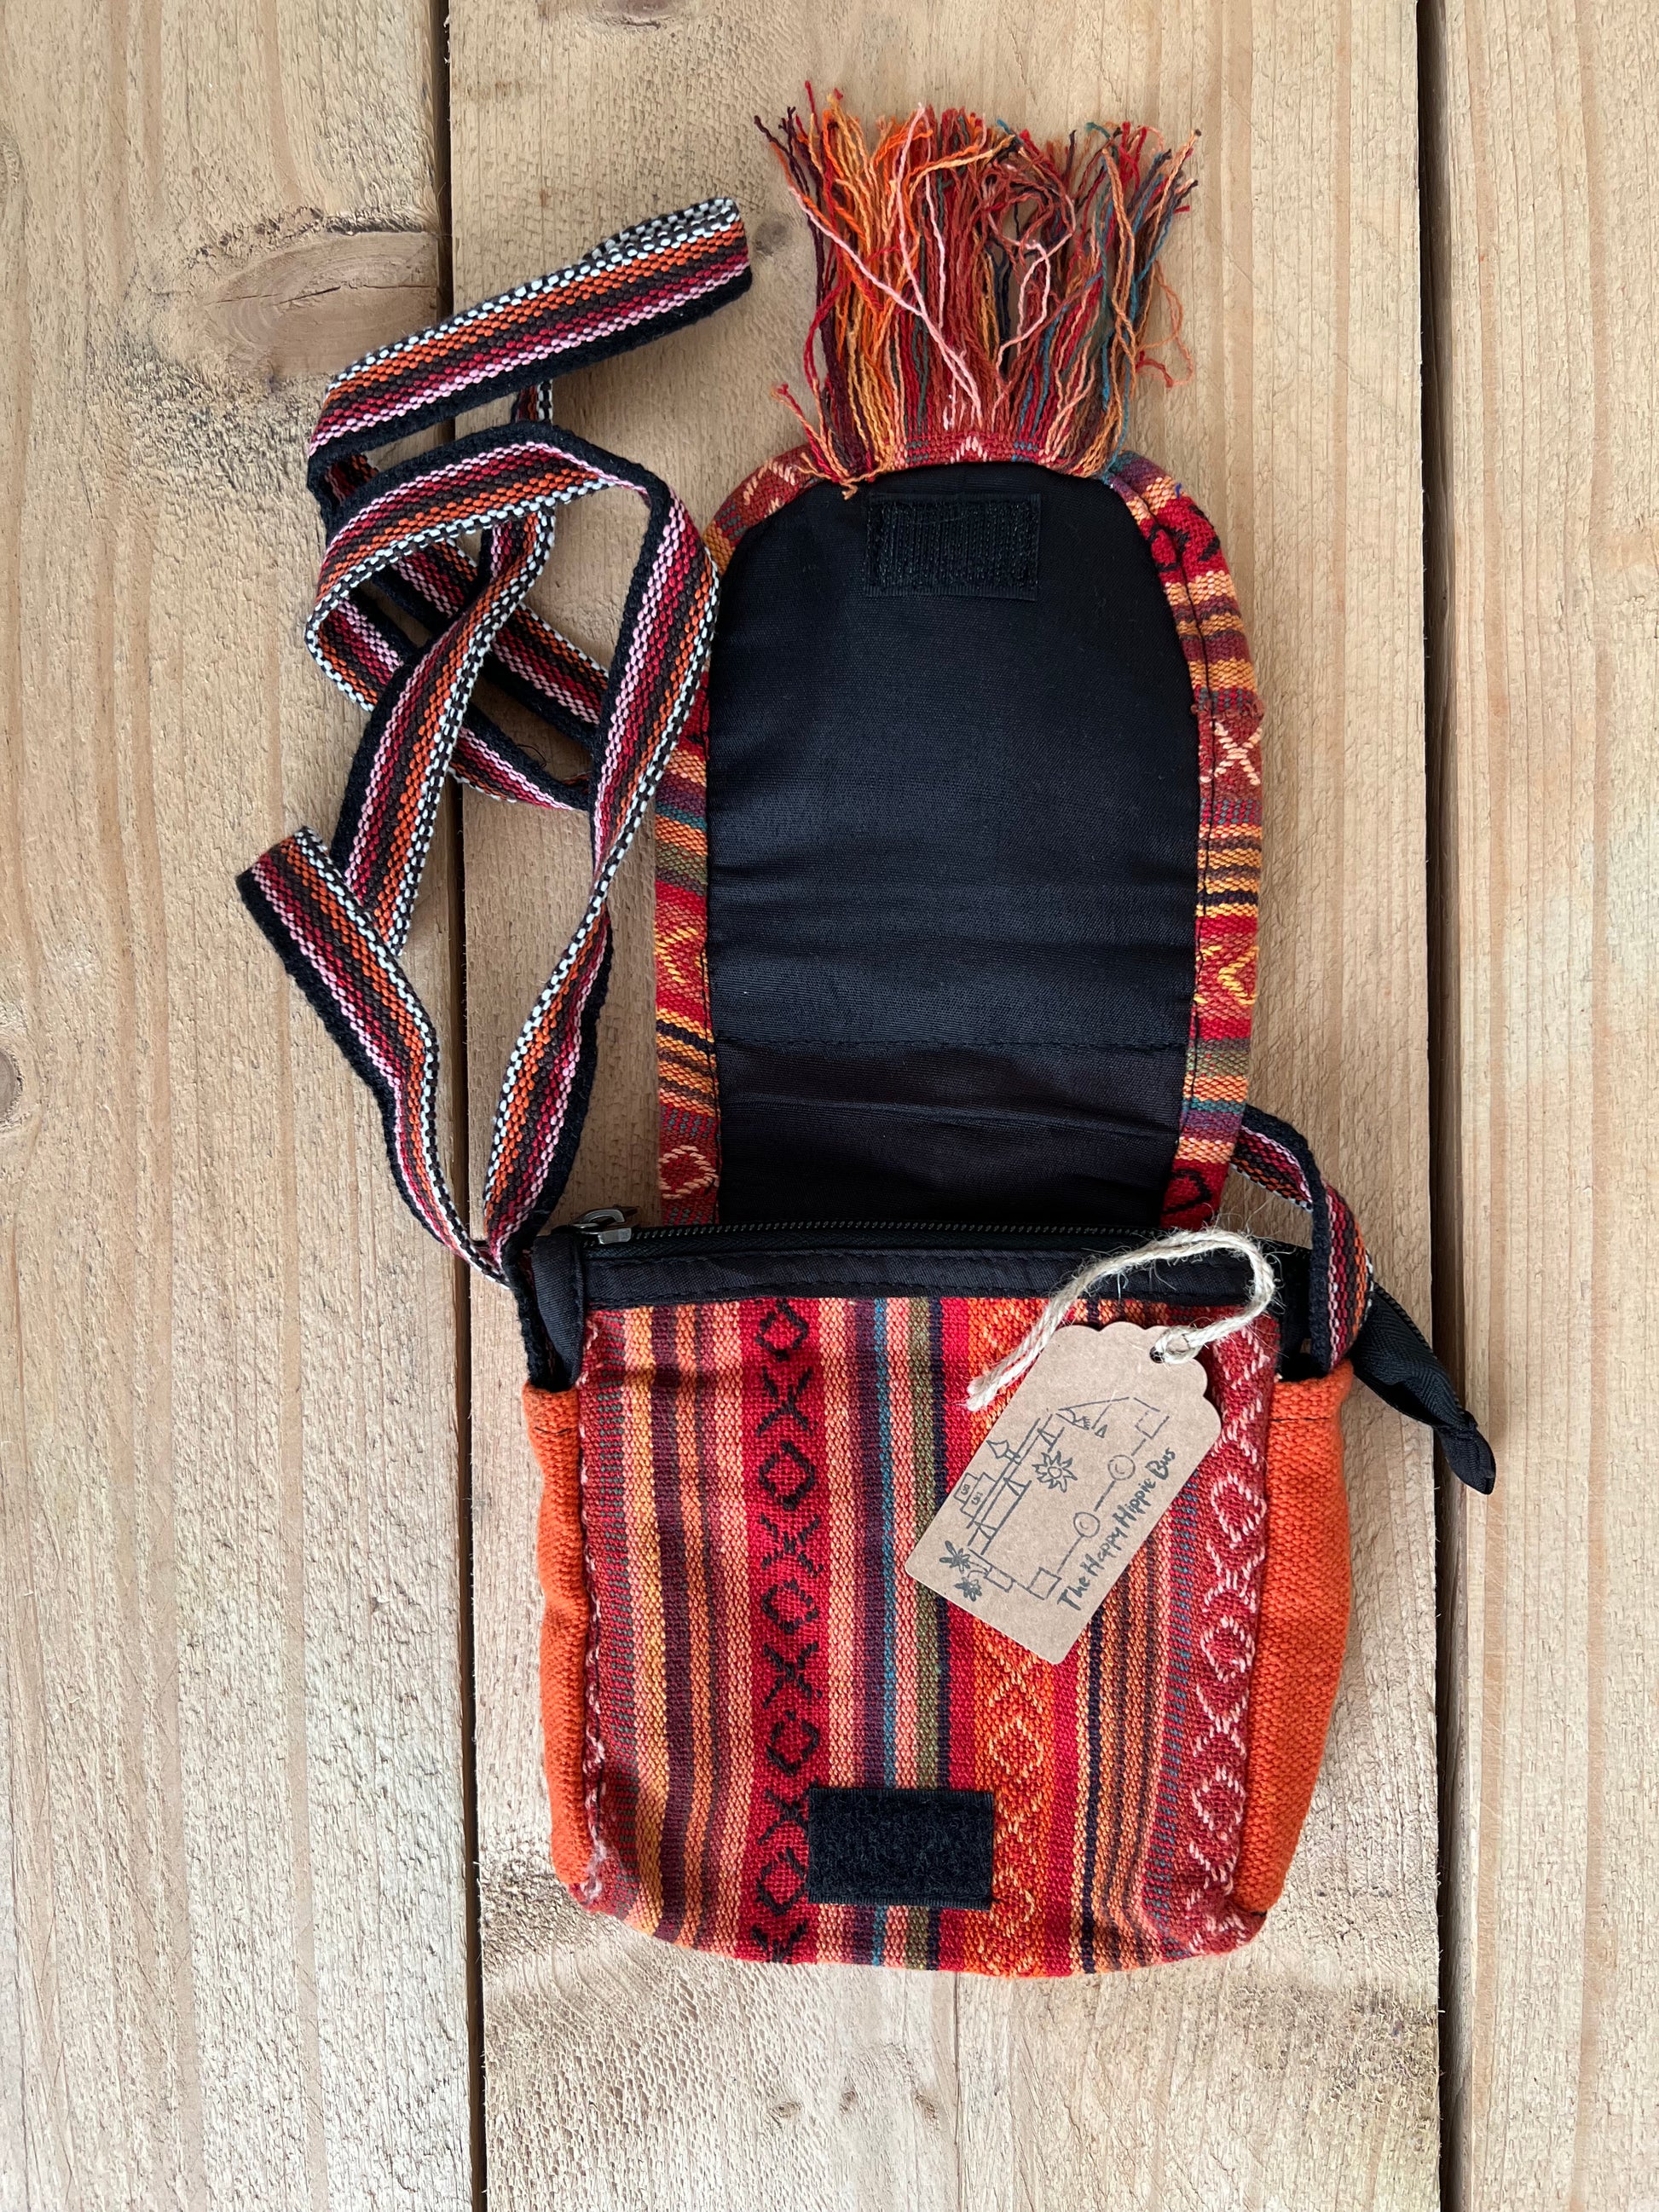 Handmade & Fair Trade Hippie Bohemian Passport Shoulder Bag Festival Beach Bag Orange